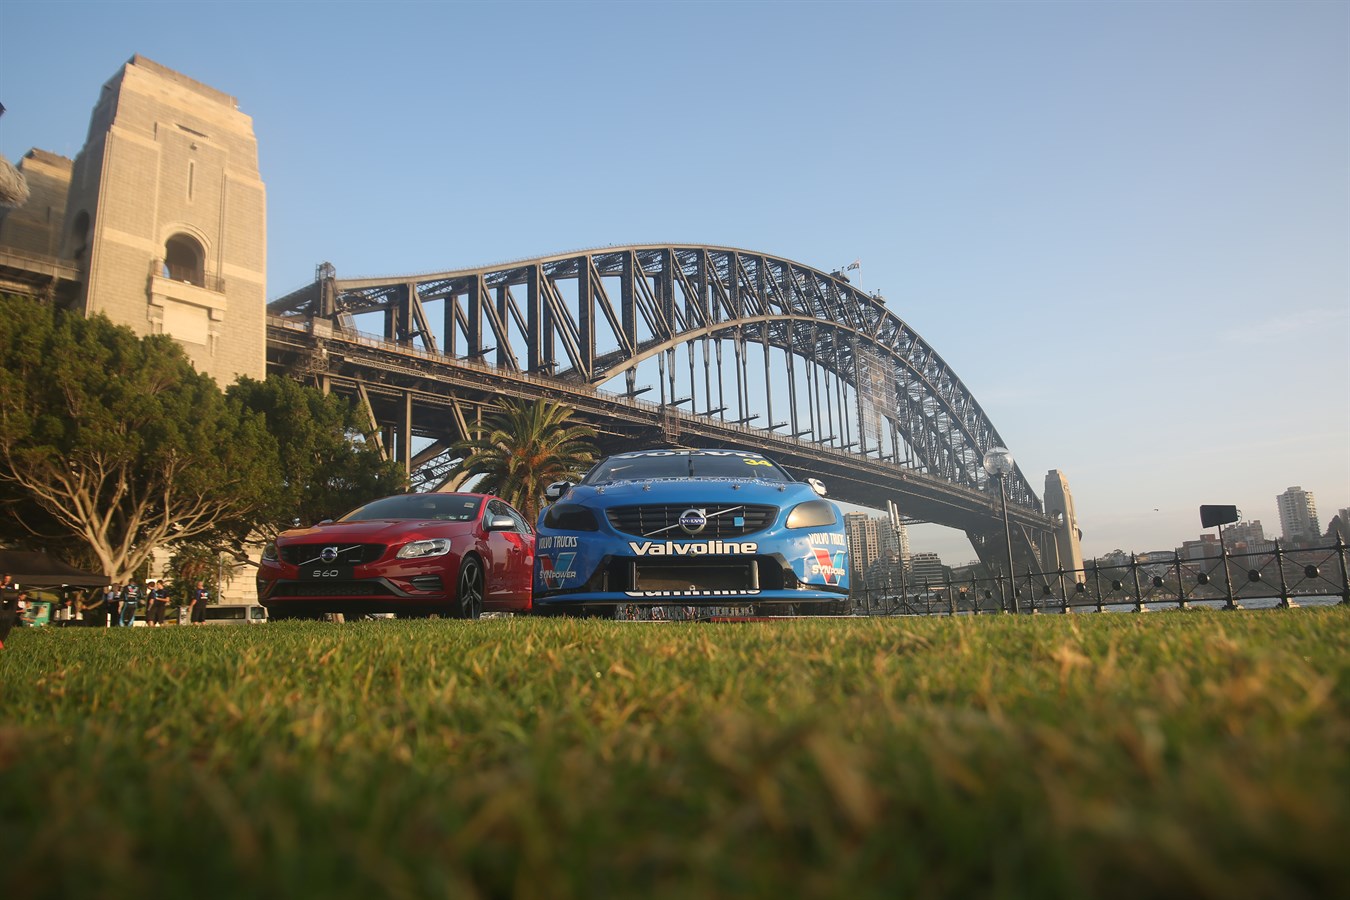 Volvo S60 V8 Supercar makes its debut in Sydney